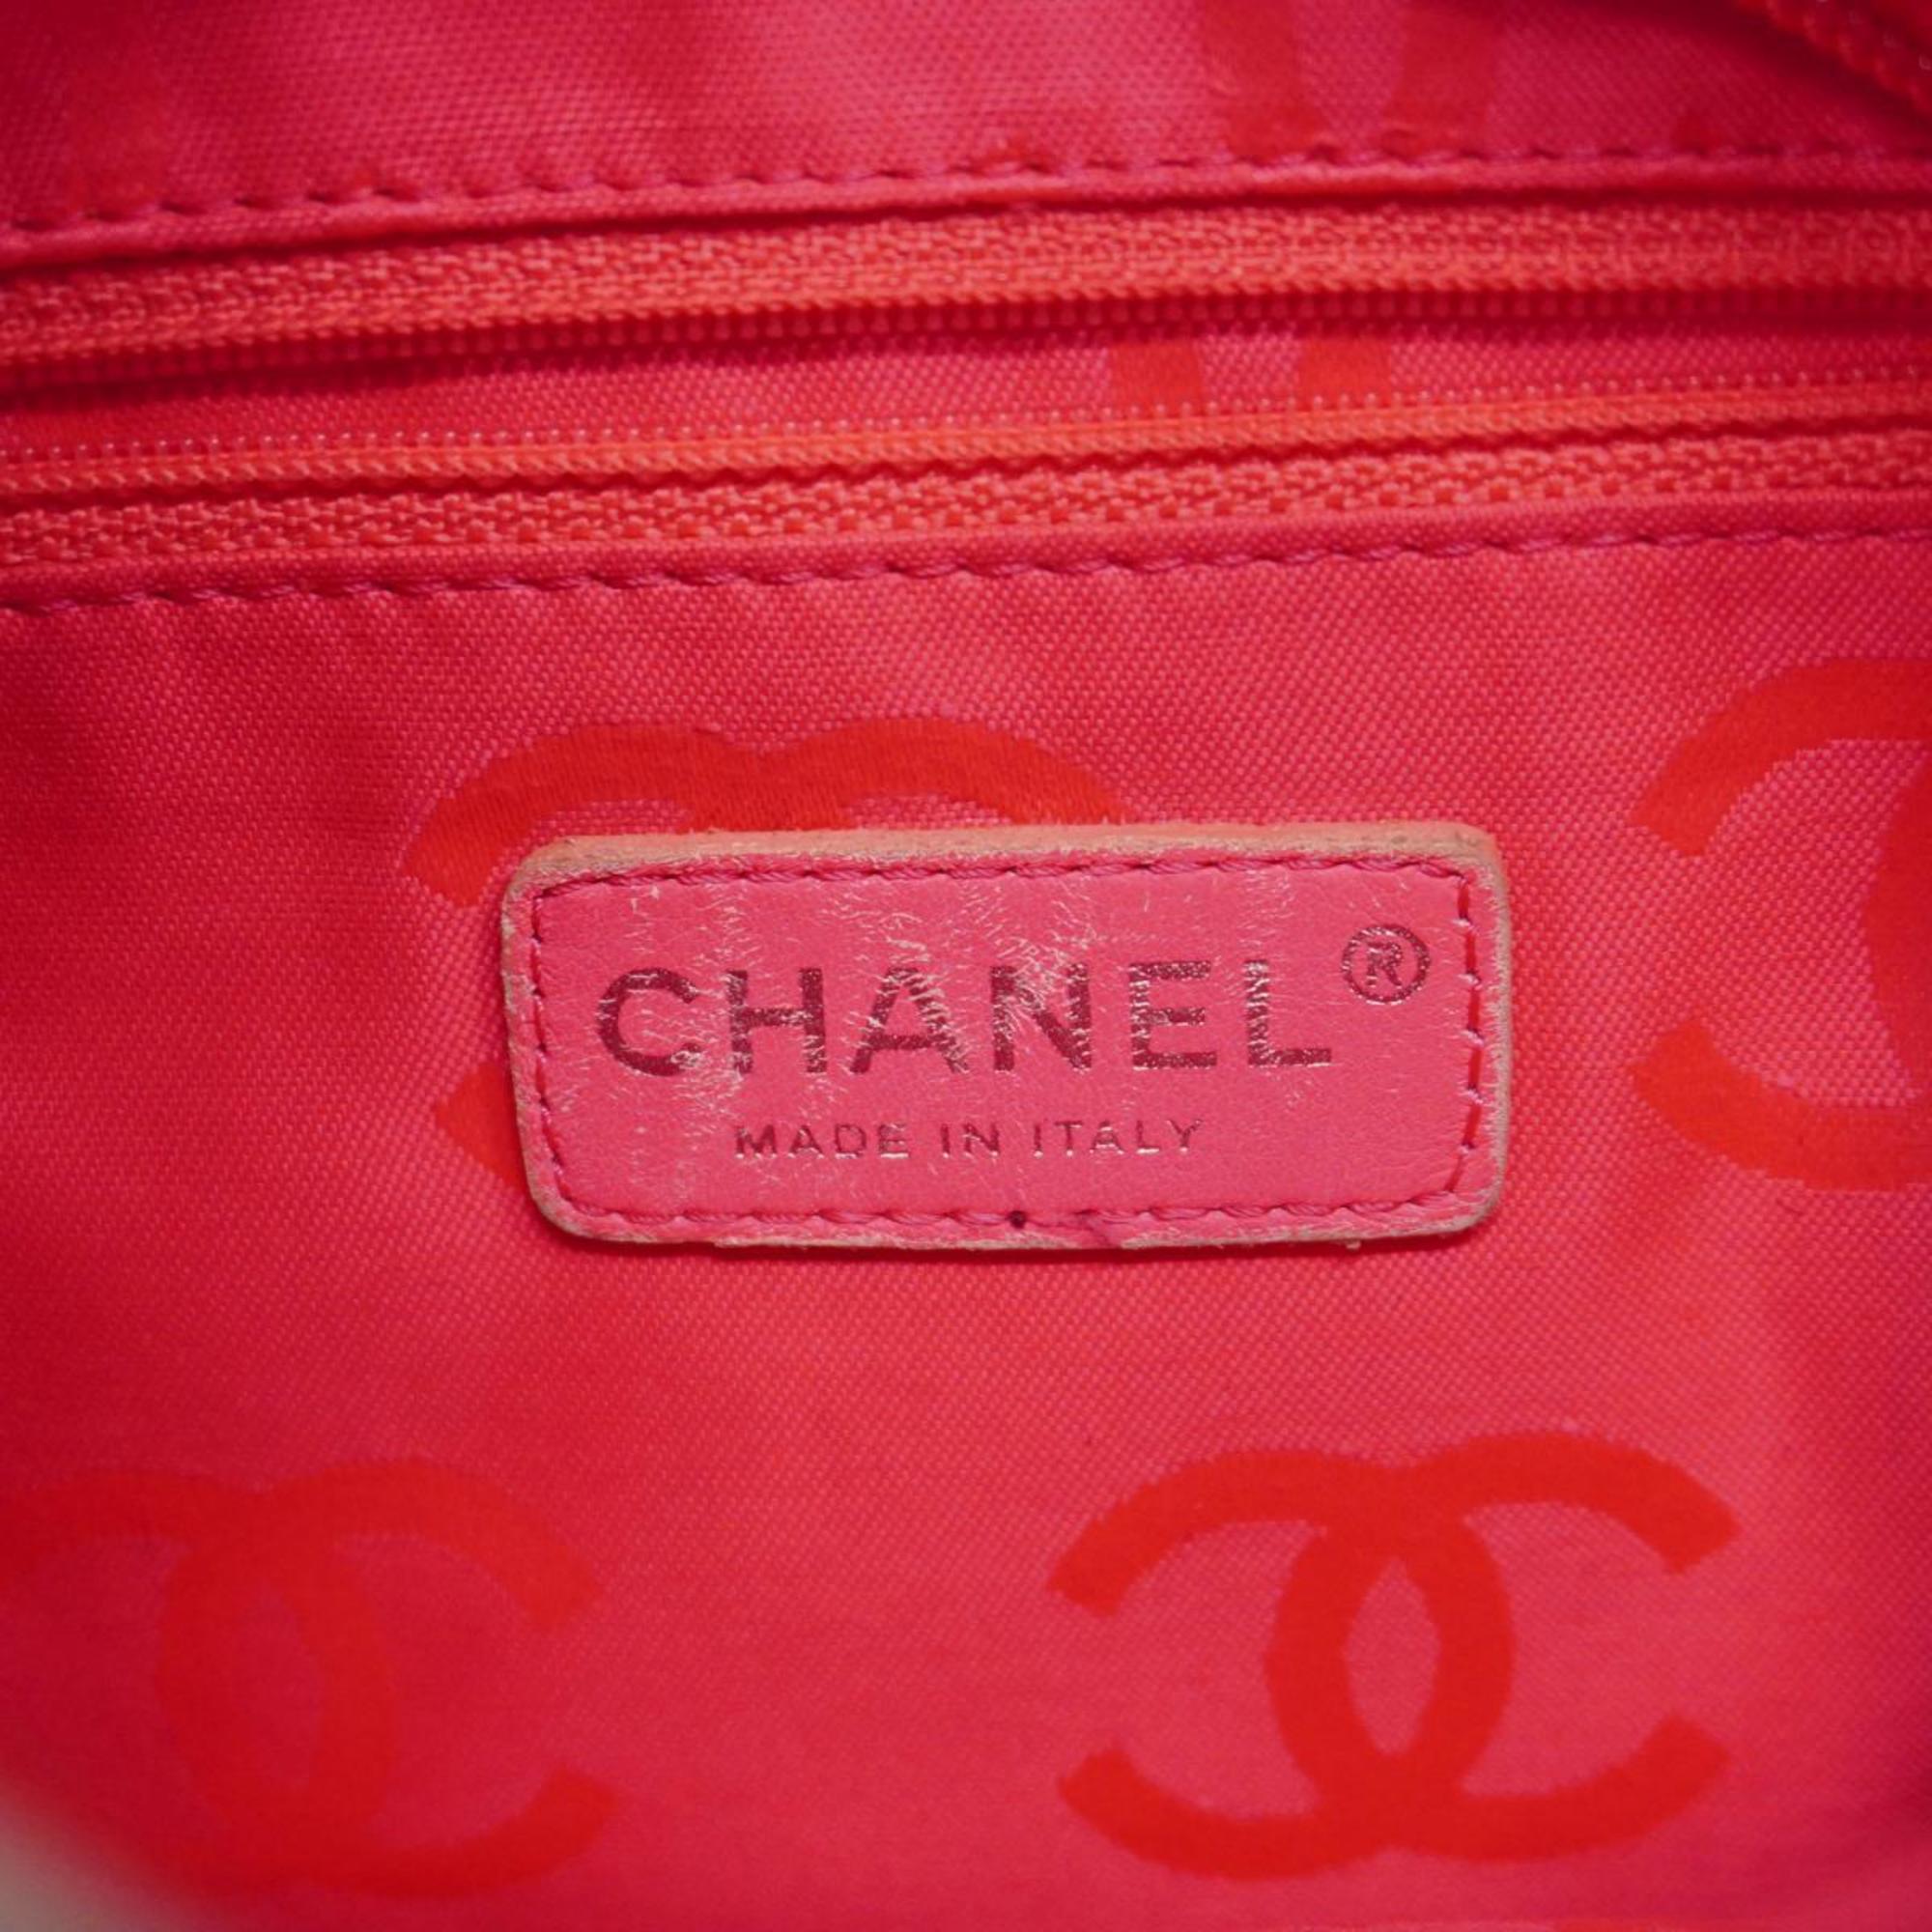 Chanel Tote Bag Cambon Lambskin Black White Women's